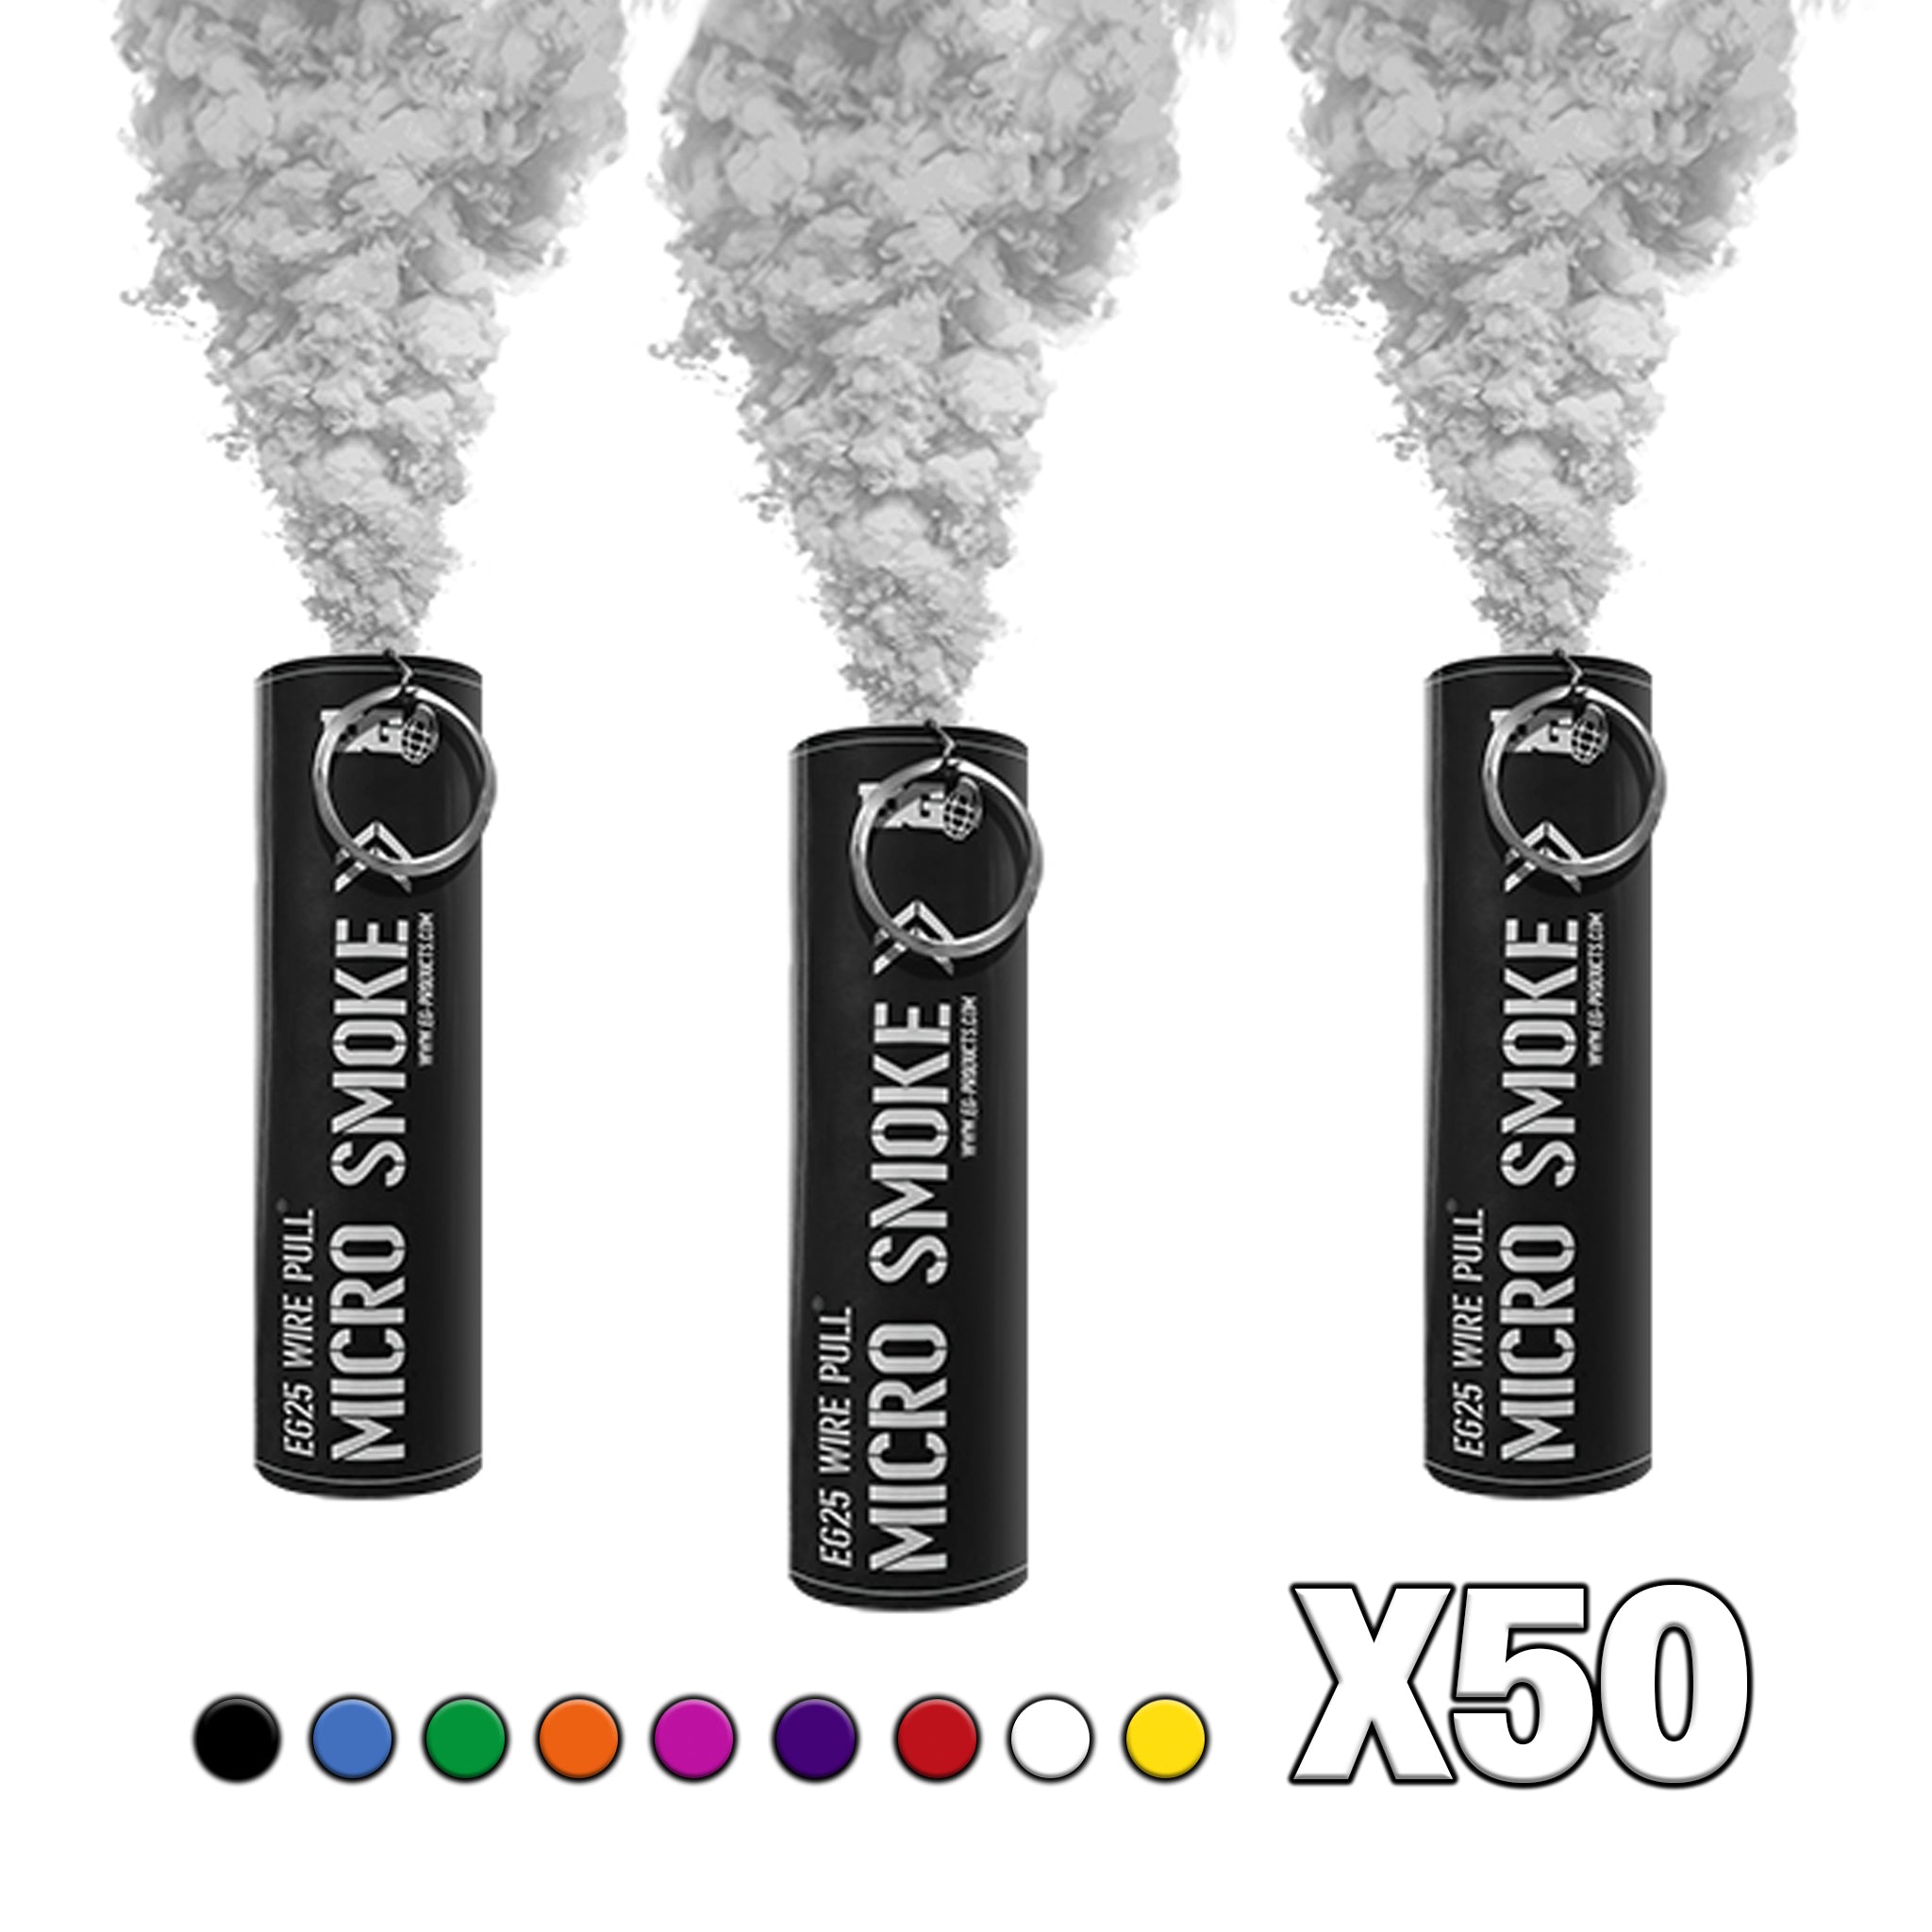 EG25 Smoke Grenades - Single Colour - Pack Of 50